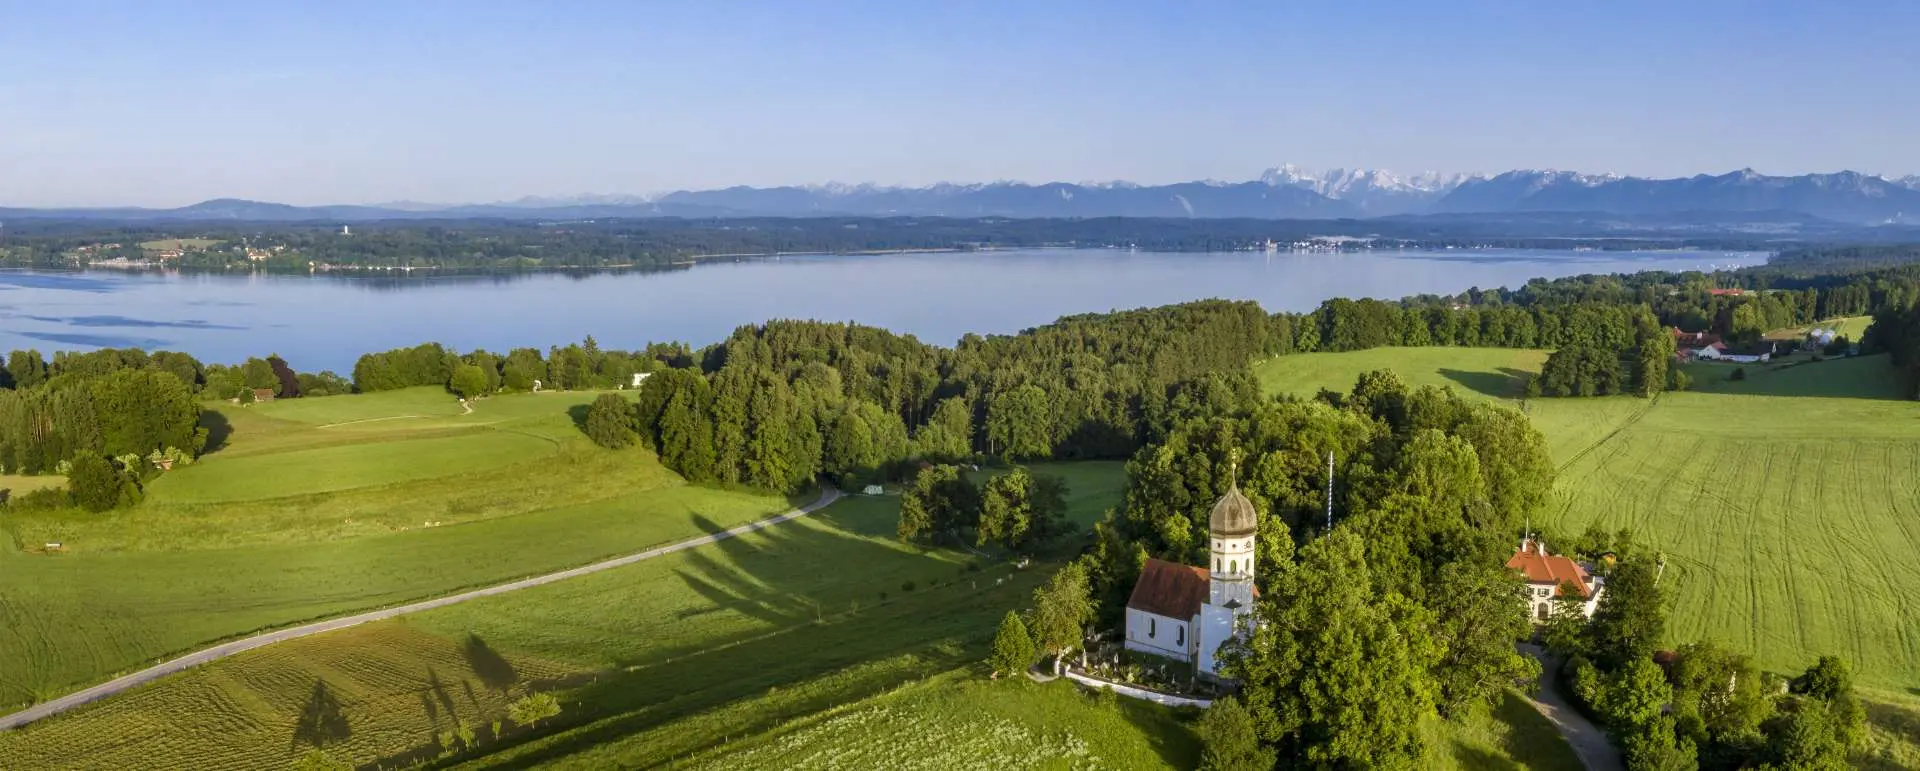 Lake Starnberg - the destination for group hotel for music groups